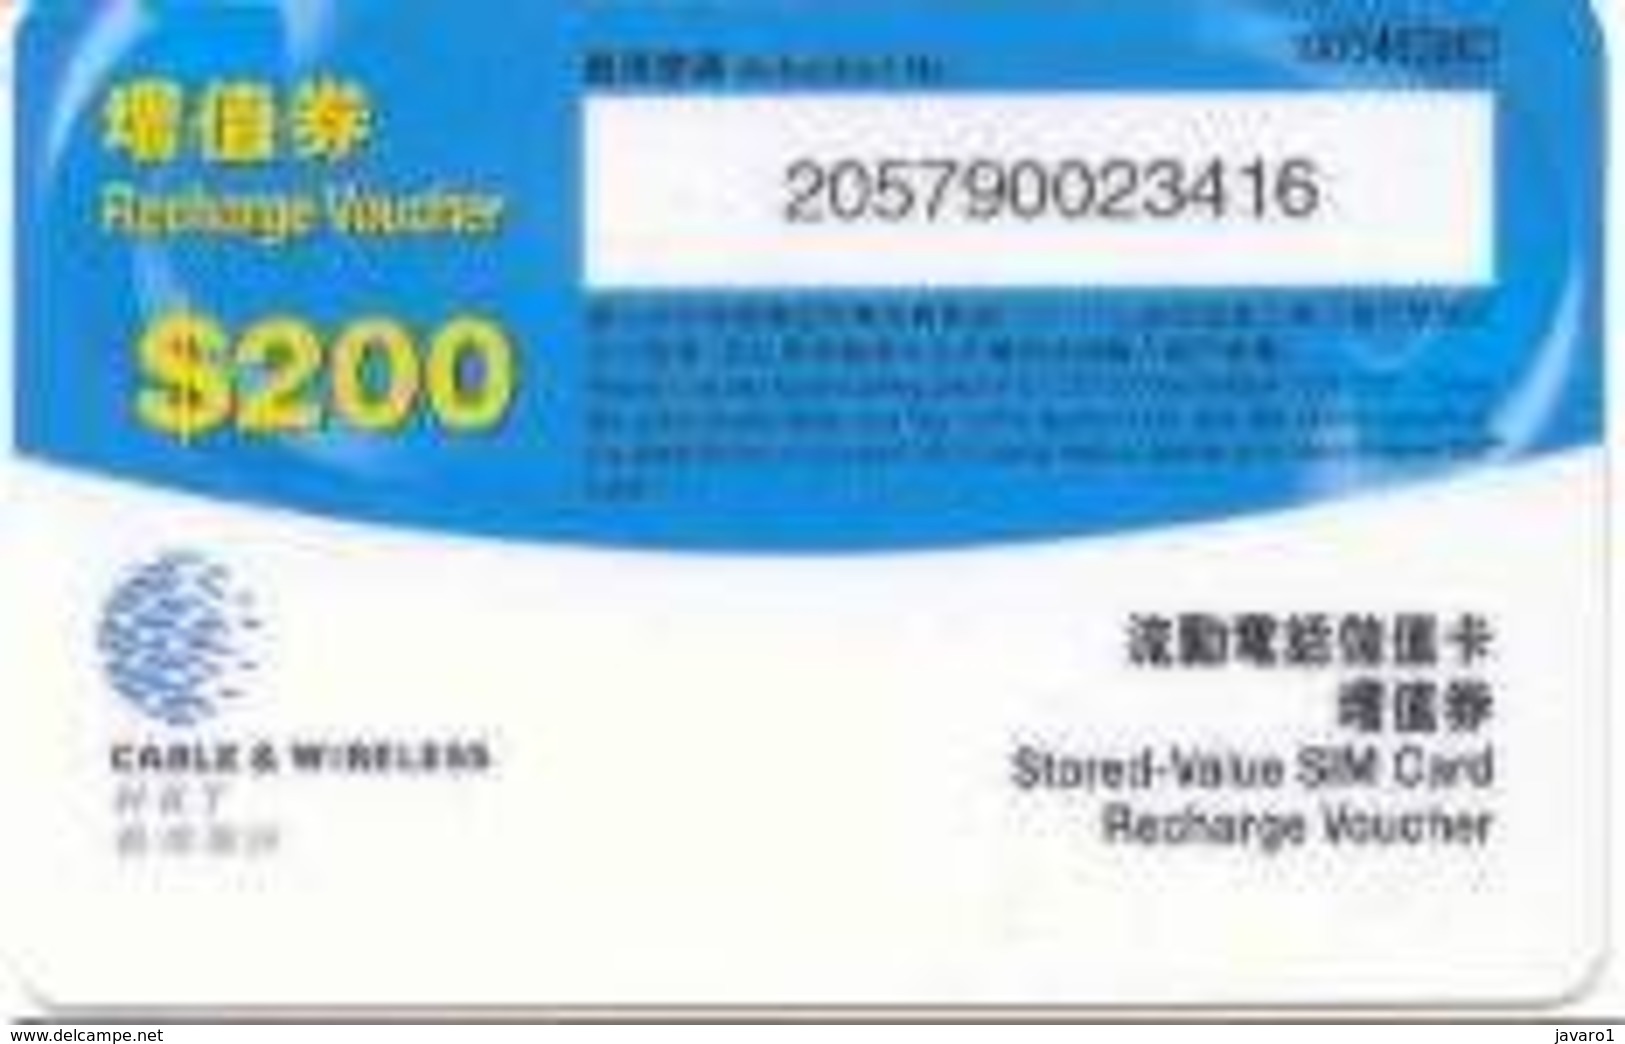 HONGKONG : HKG10 $200 C+W HKY Recharge Voucher USED - Hongkong